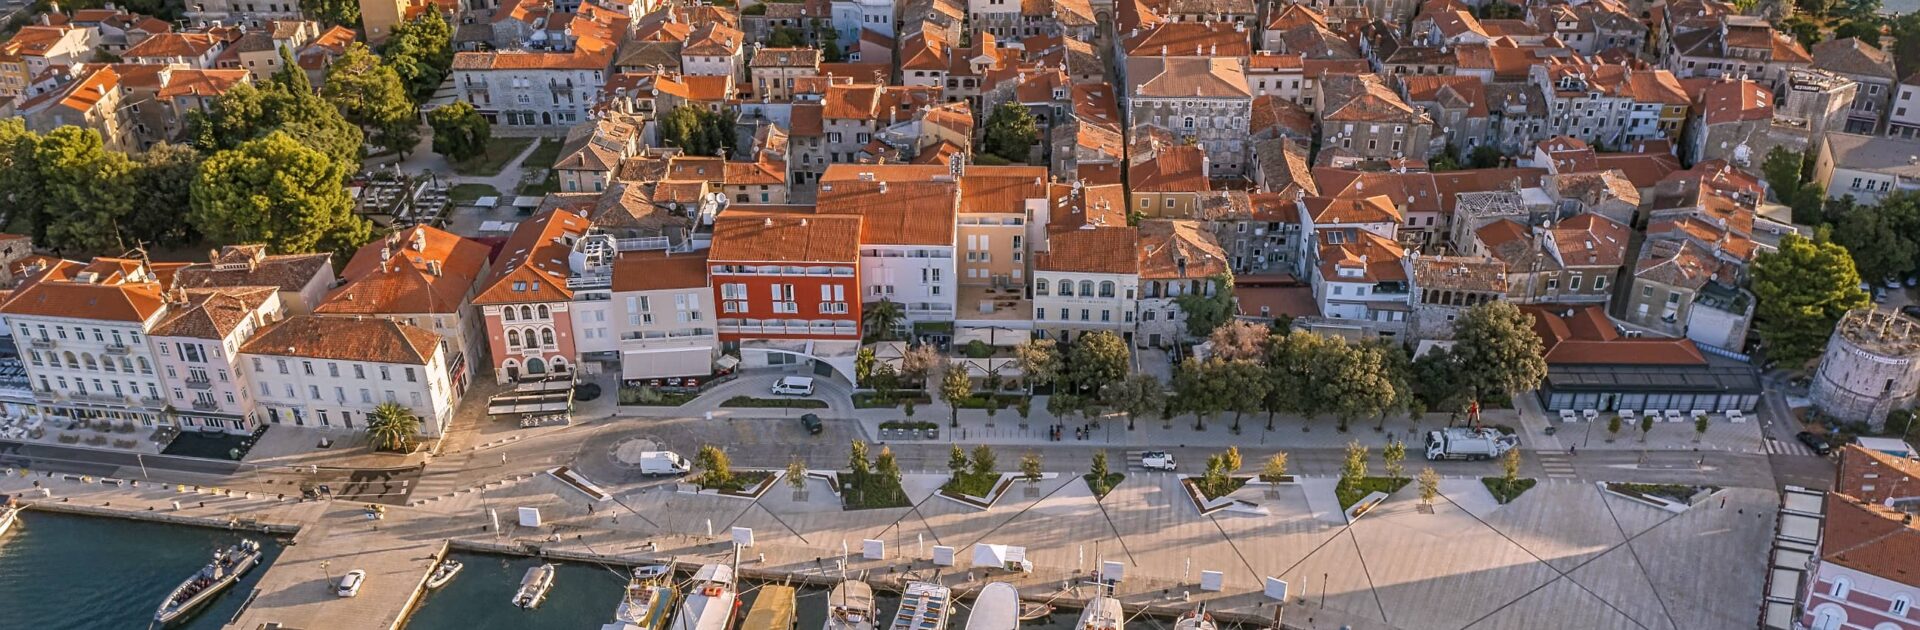 Best places to visit in Istria Croatia